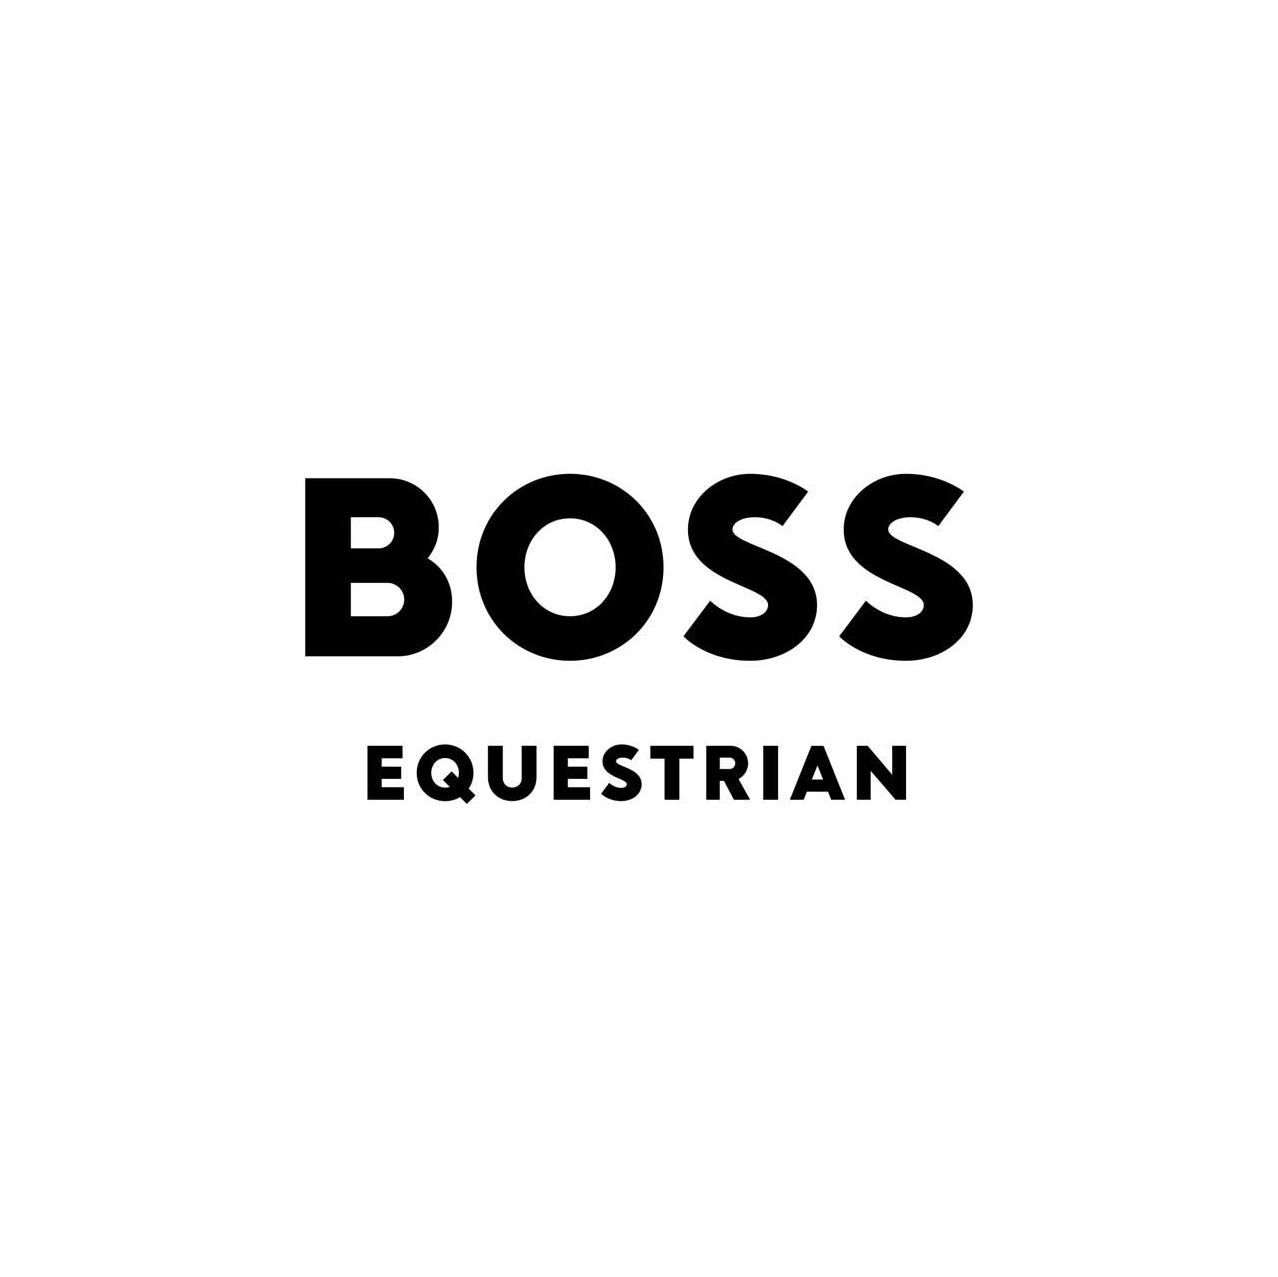 03. BOSS Equestrian